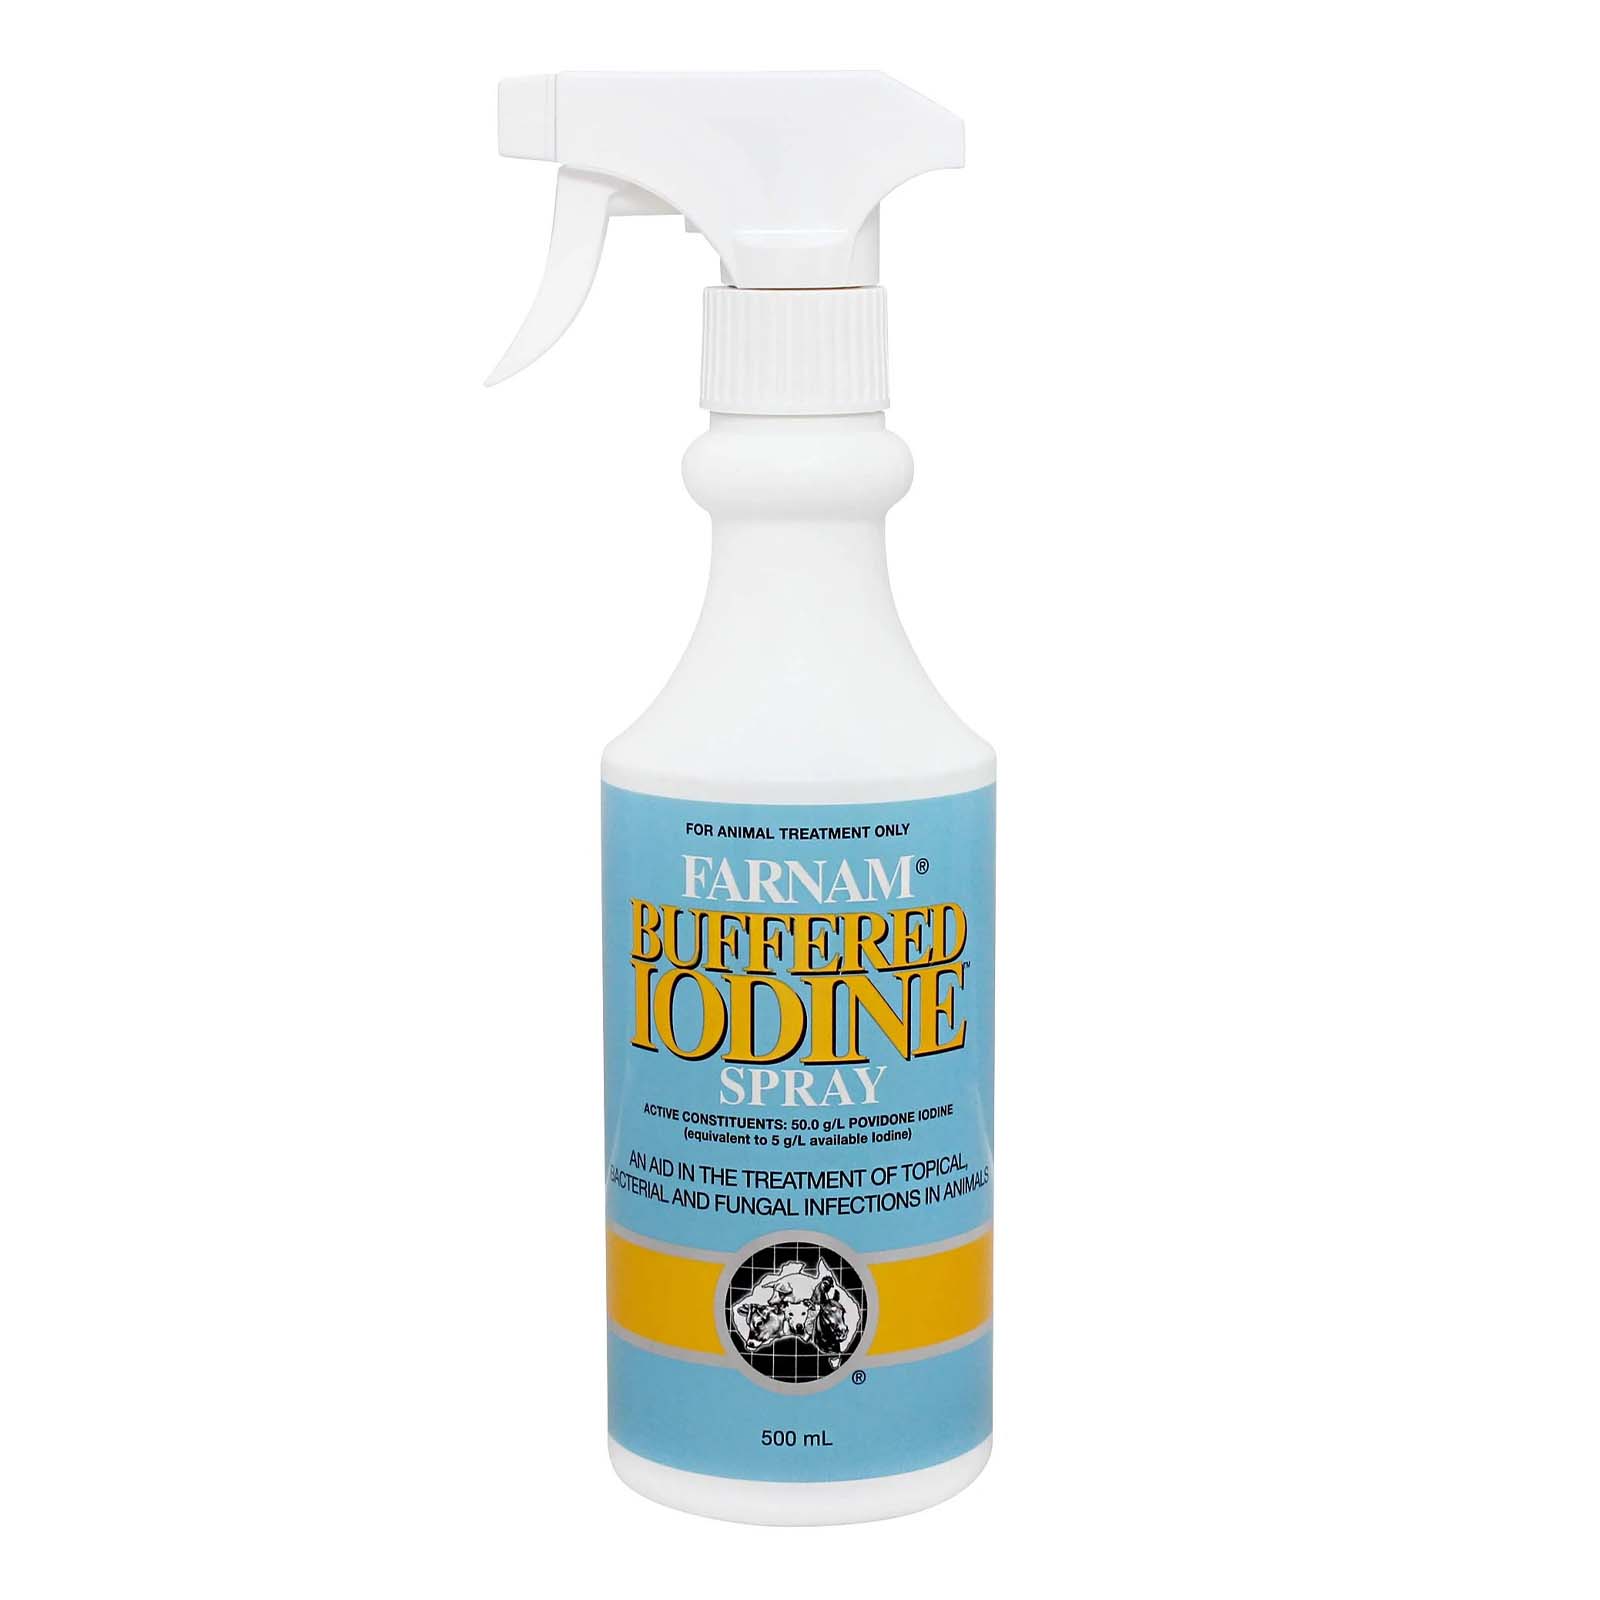 Farnam Buffered Iodine Spray for Dogs